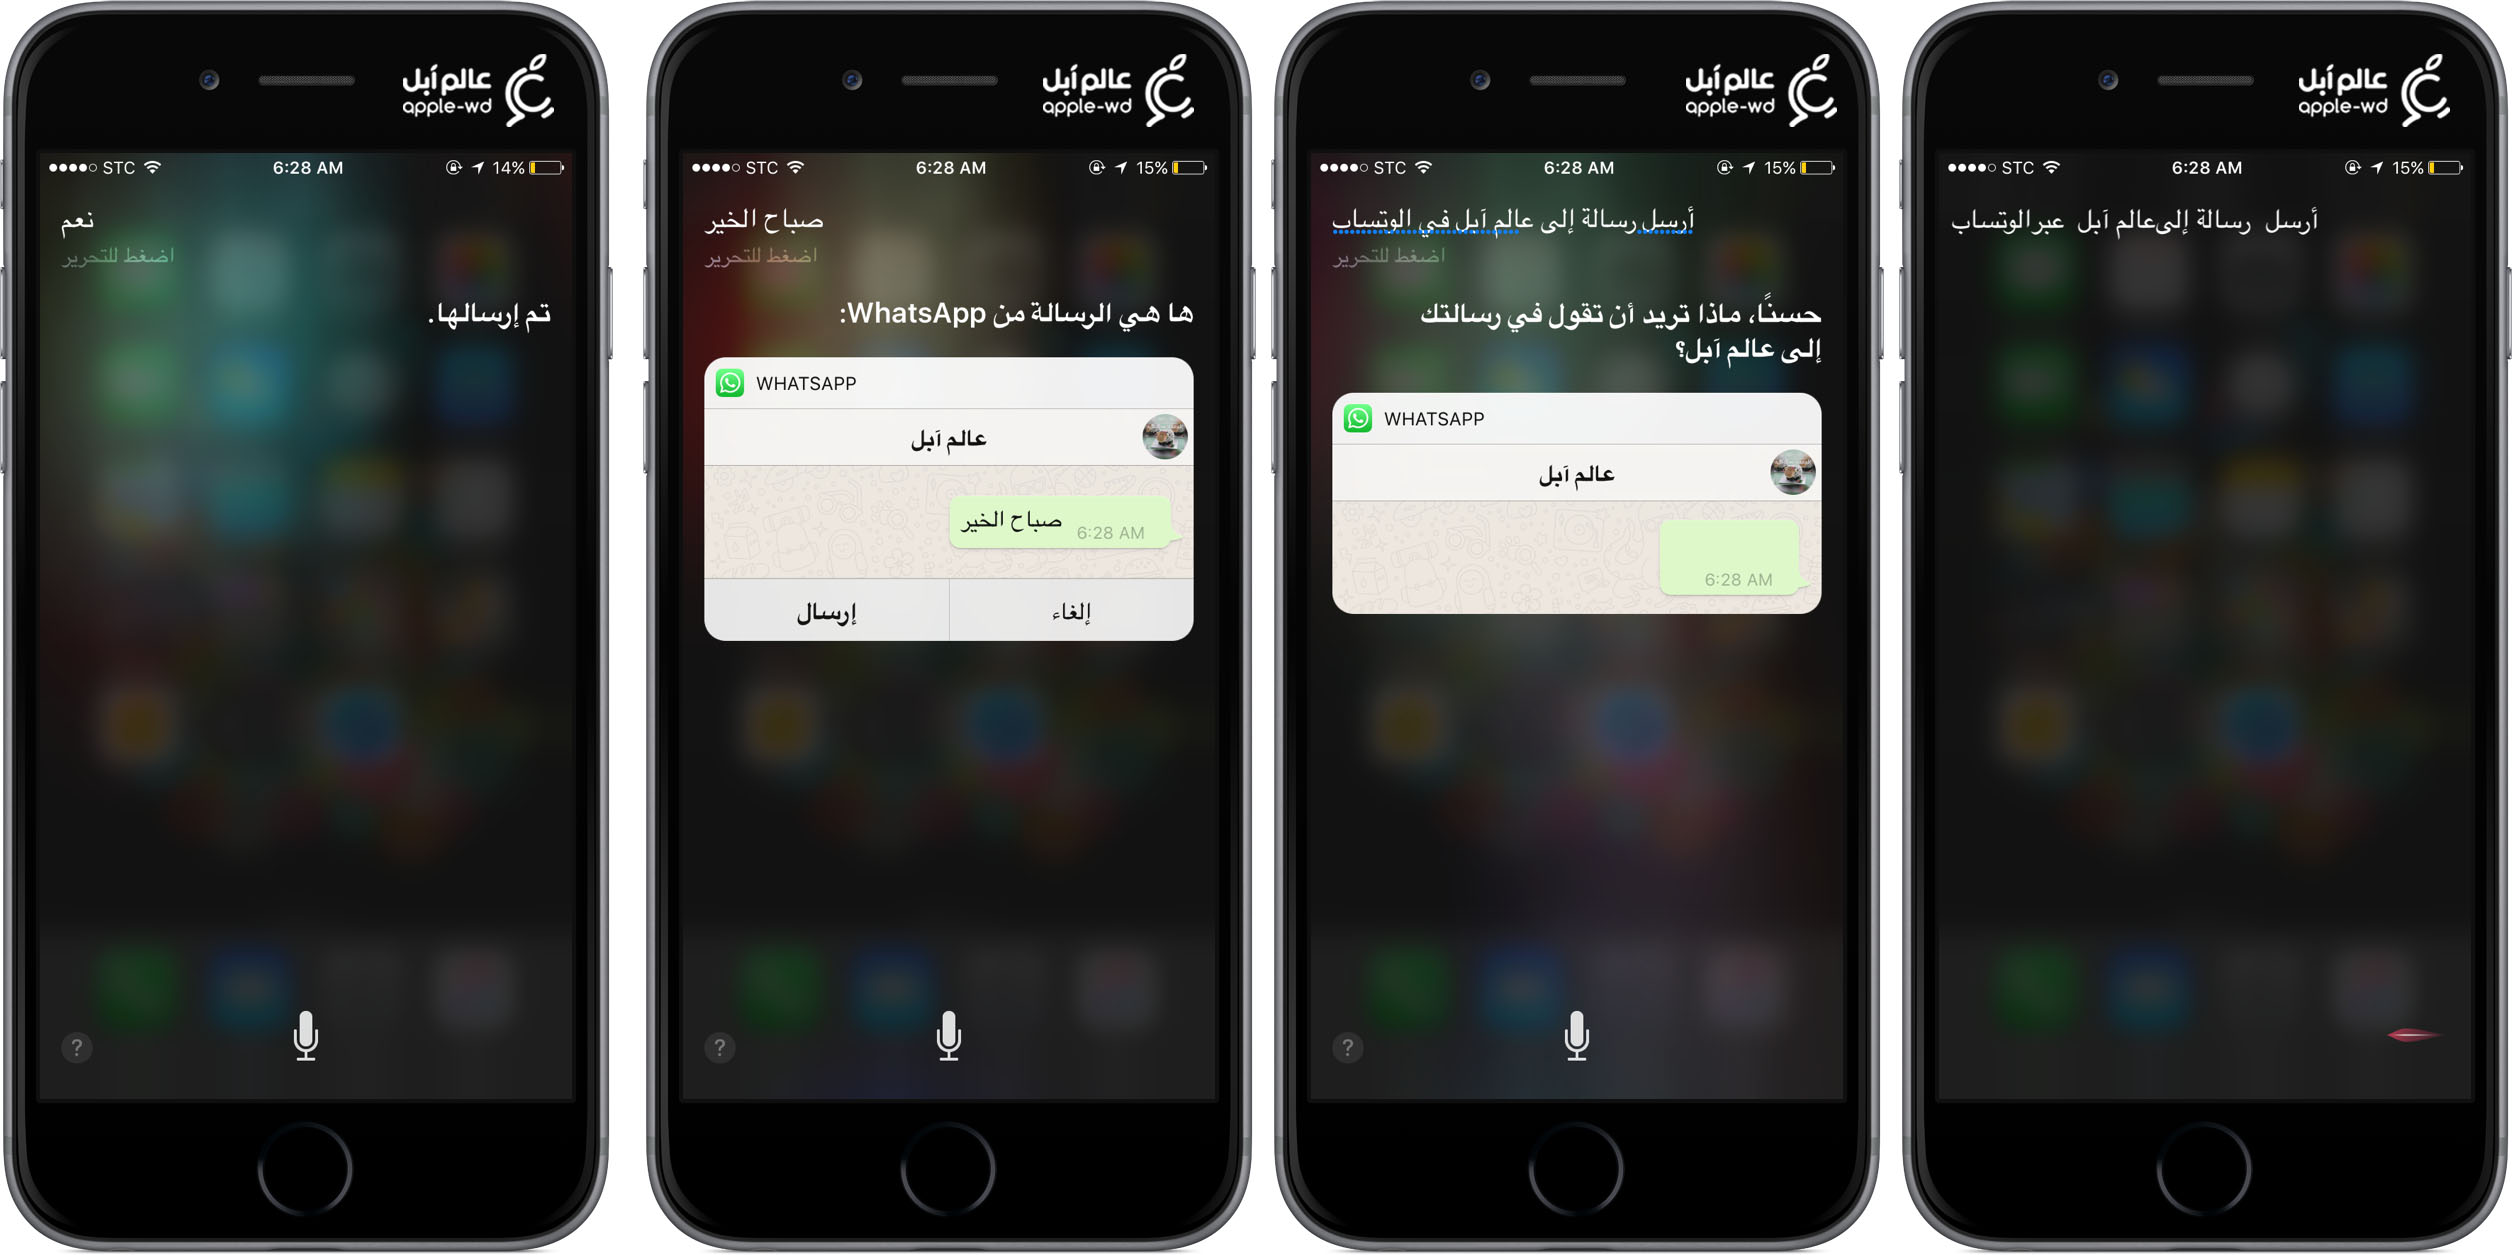 whatsapp-2-16-for-ios-phone-integration-iphone-screenshot-001